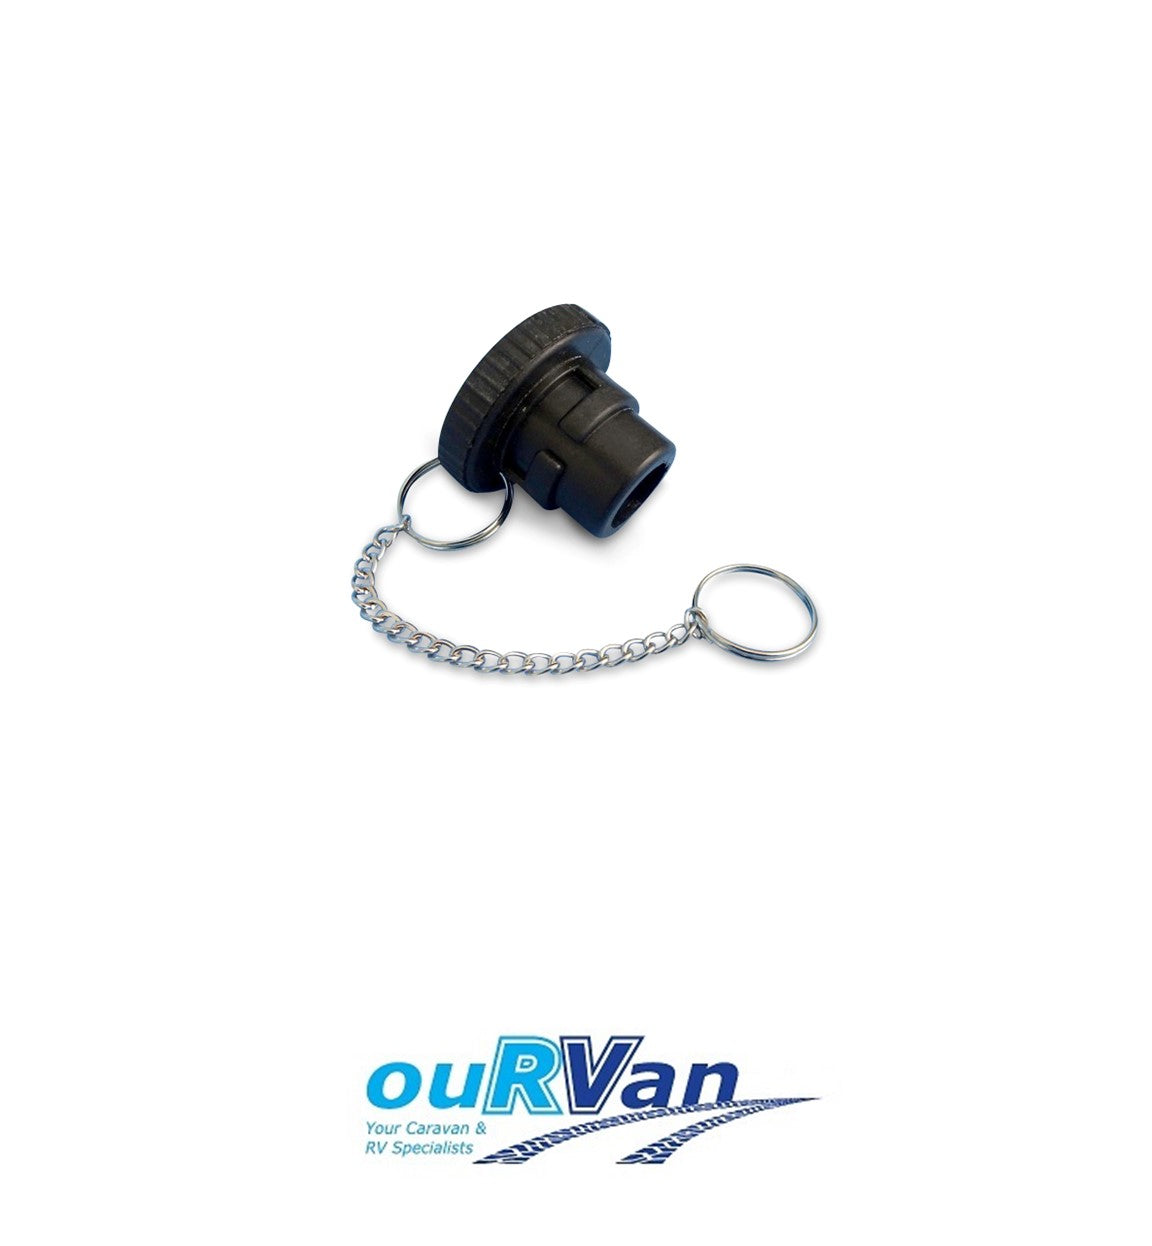 Caravan Gas Bbq Bayonet Dust Cover Plug With Chain